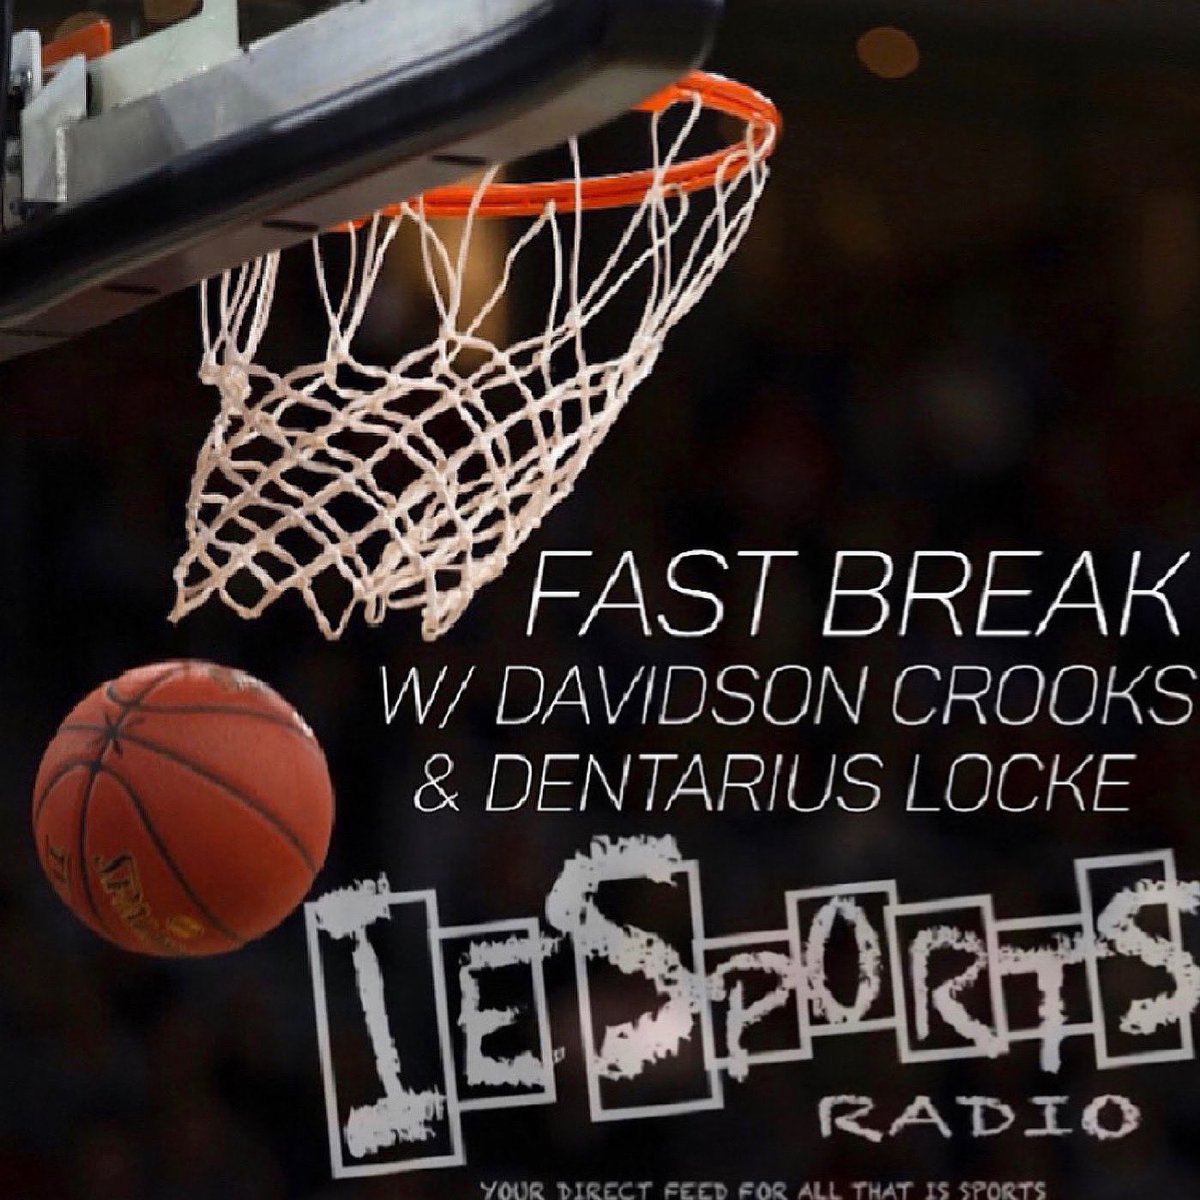 Next Up: SUN 6/25 5pm PST/8pm EST #FastBreak with @spawn4288 and @BlackDash813
#NBA #NBADraft #NBAOffseason #Dubnation #ChrisPaul #RallyTheValley #DCAboveAll #Wembanyama #Spurs #PorVida #RIPCity #LetsFly #Lakeshow
@FastBreakIESR
spreaker.com/show/fast-brea…